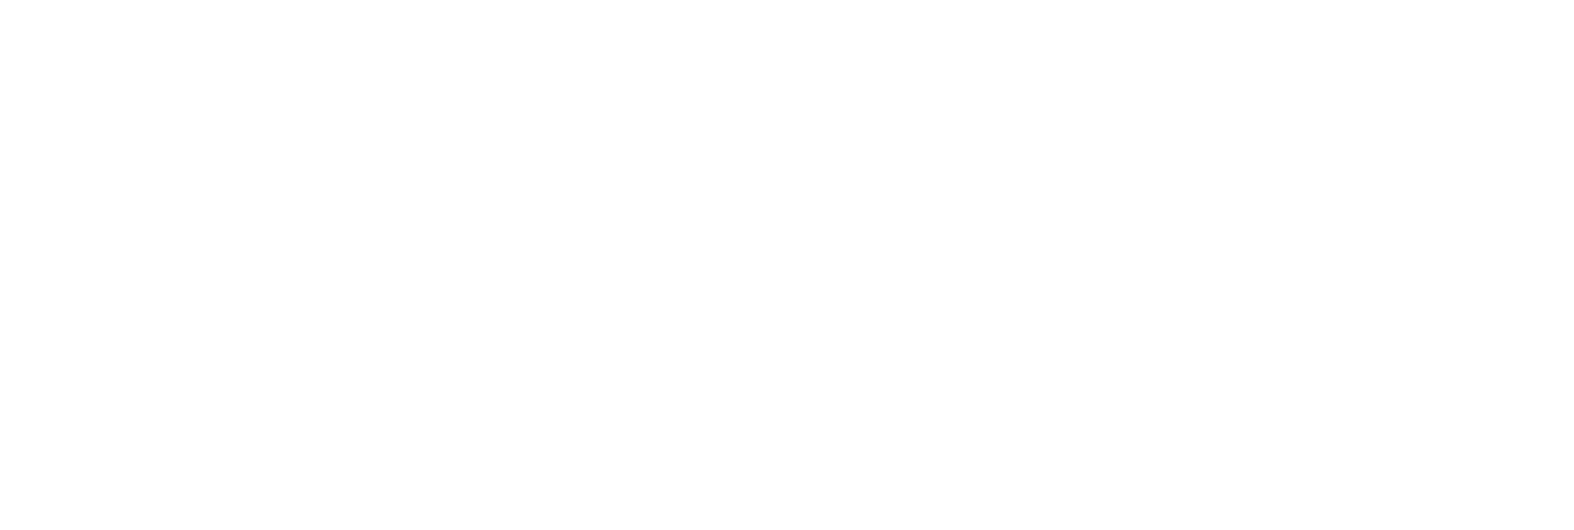 XOS logo large for dark backgrounds (transparent PNG)